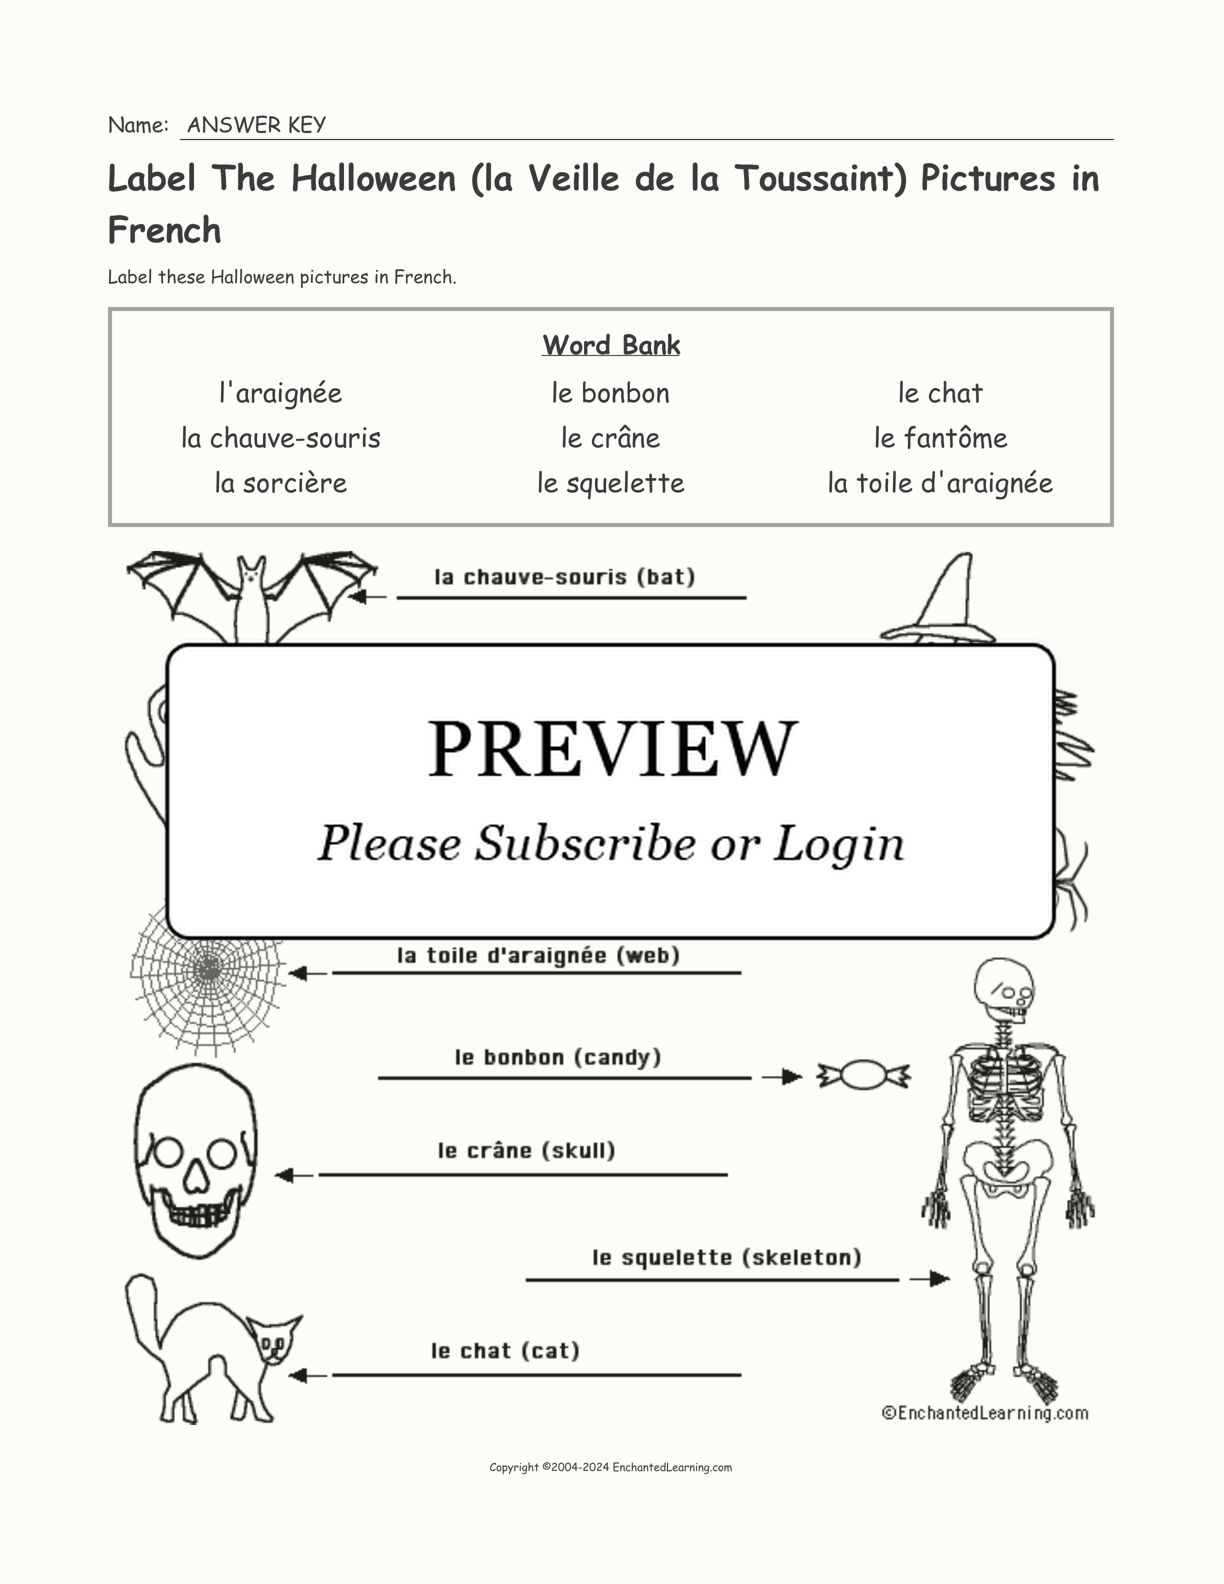 Label The Halloween (la Veille de la Toussaint) Pictures in French interactive worksheet page 2